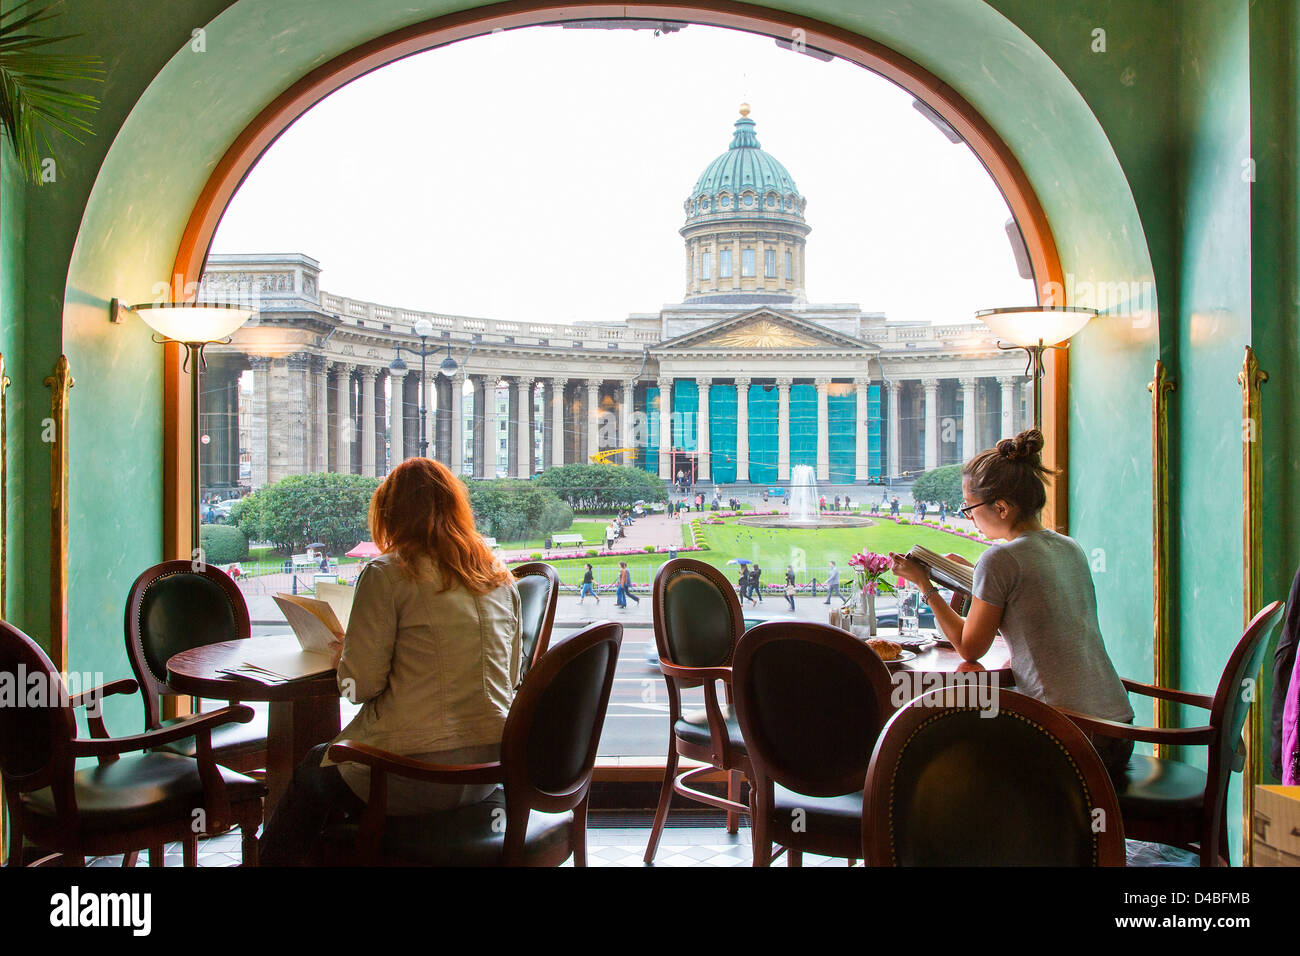 St. Petersburg, Cafe in Dom Knigi Bookshop Stock Photo